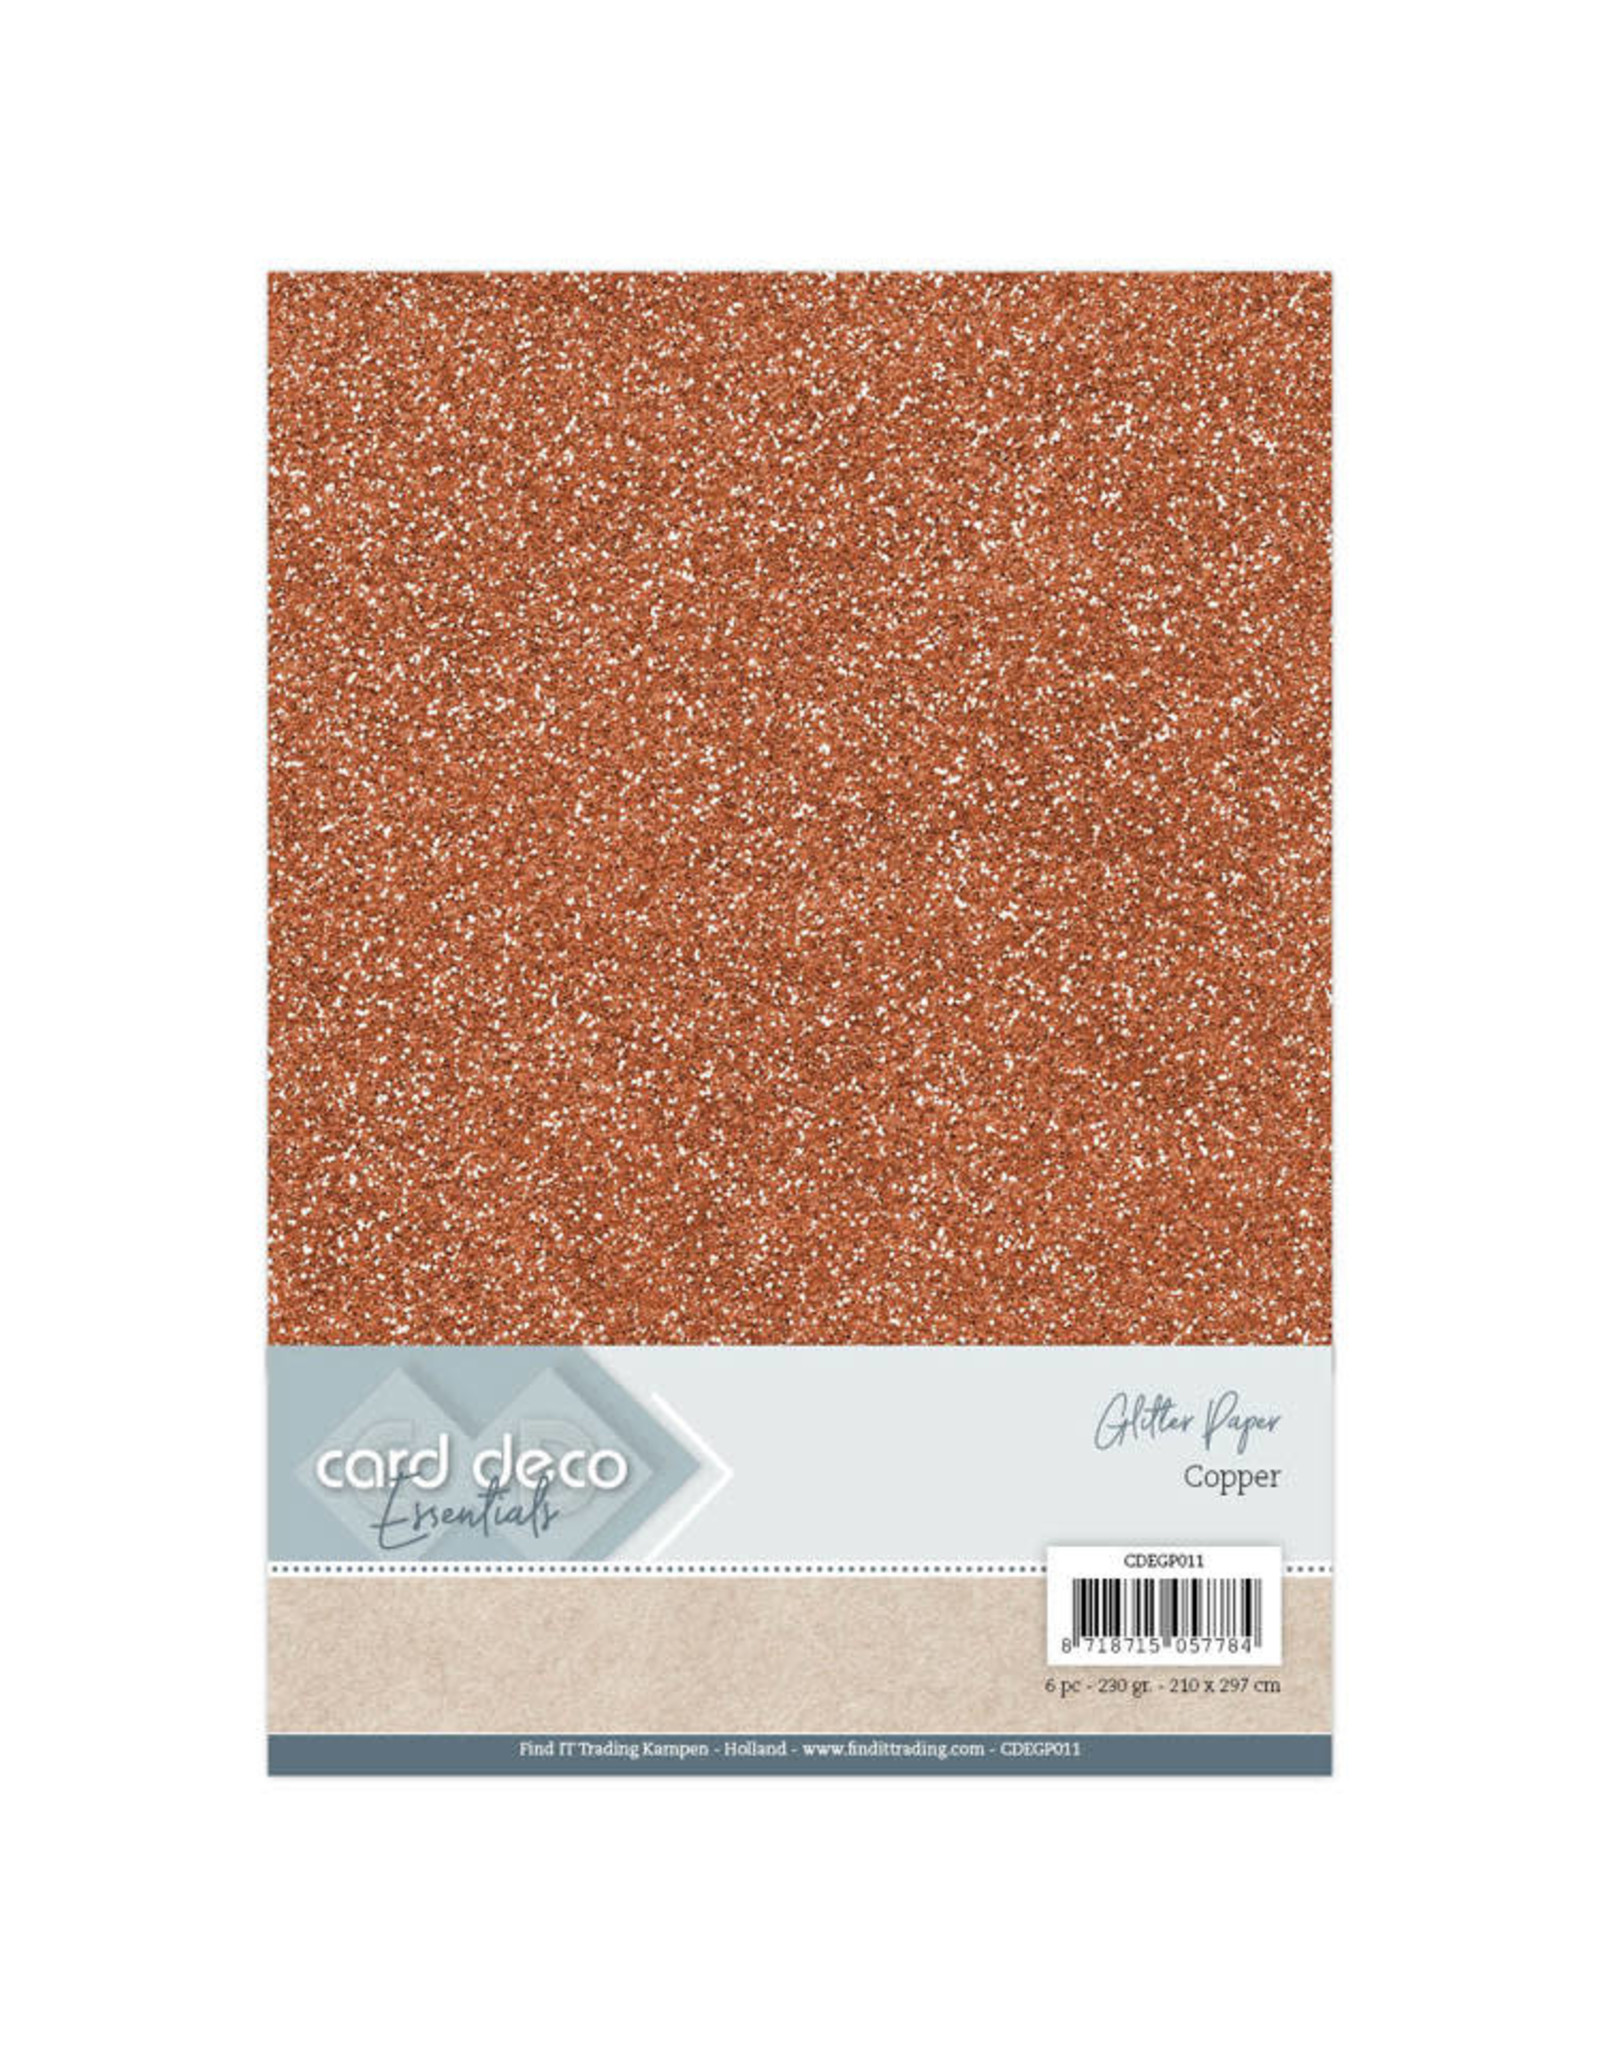 Card Deco Card Deco Essentials Glitter Paper Copper